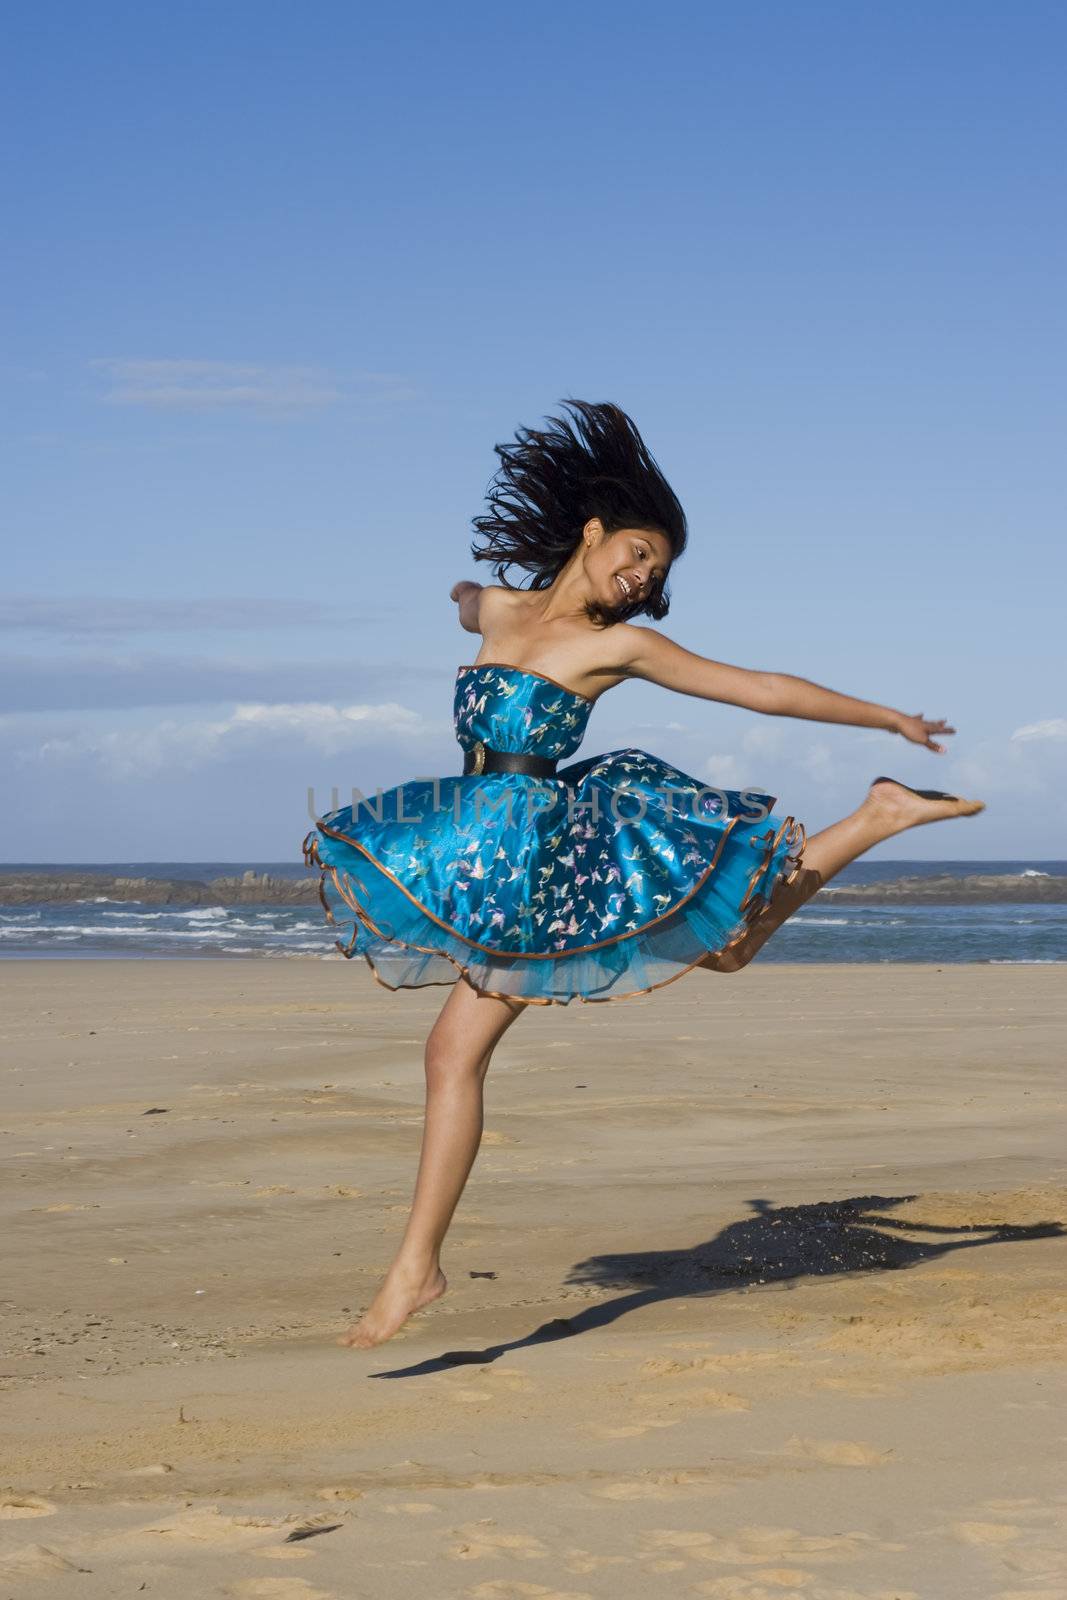 Pretty girl jumping wearing a puffy blue dress